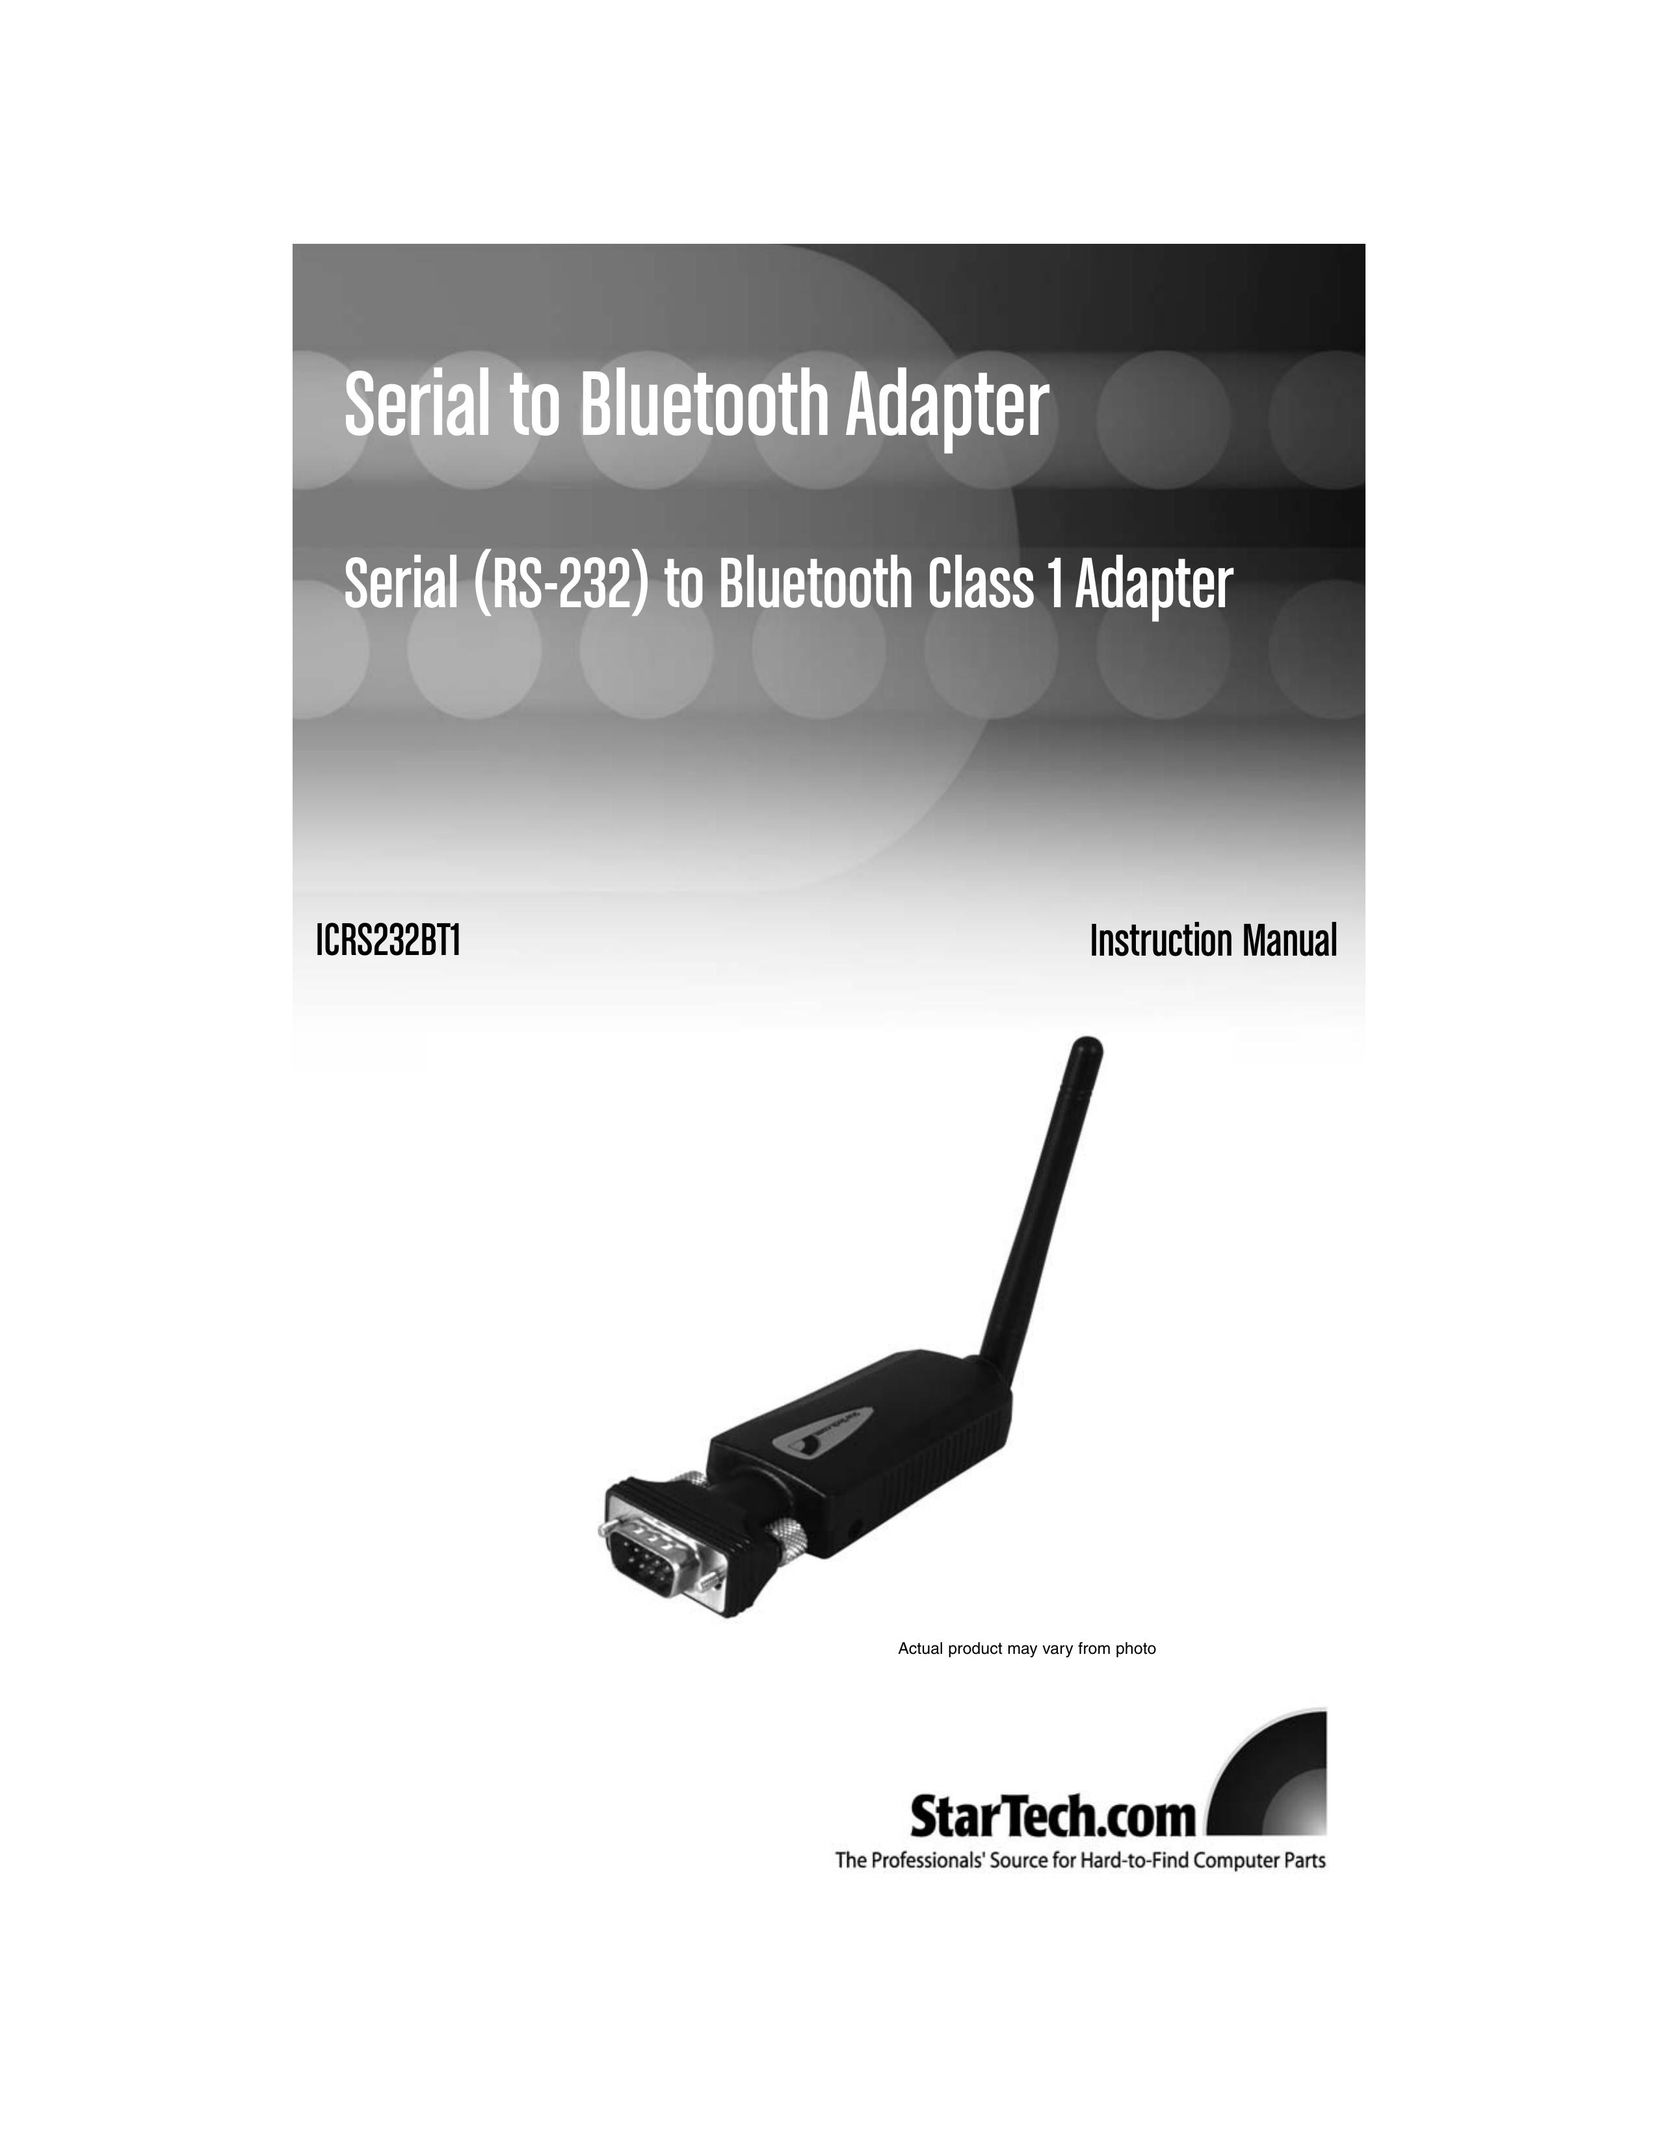 StarTech.com RS-232 Bluetooth Headset User Manual